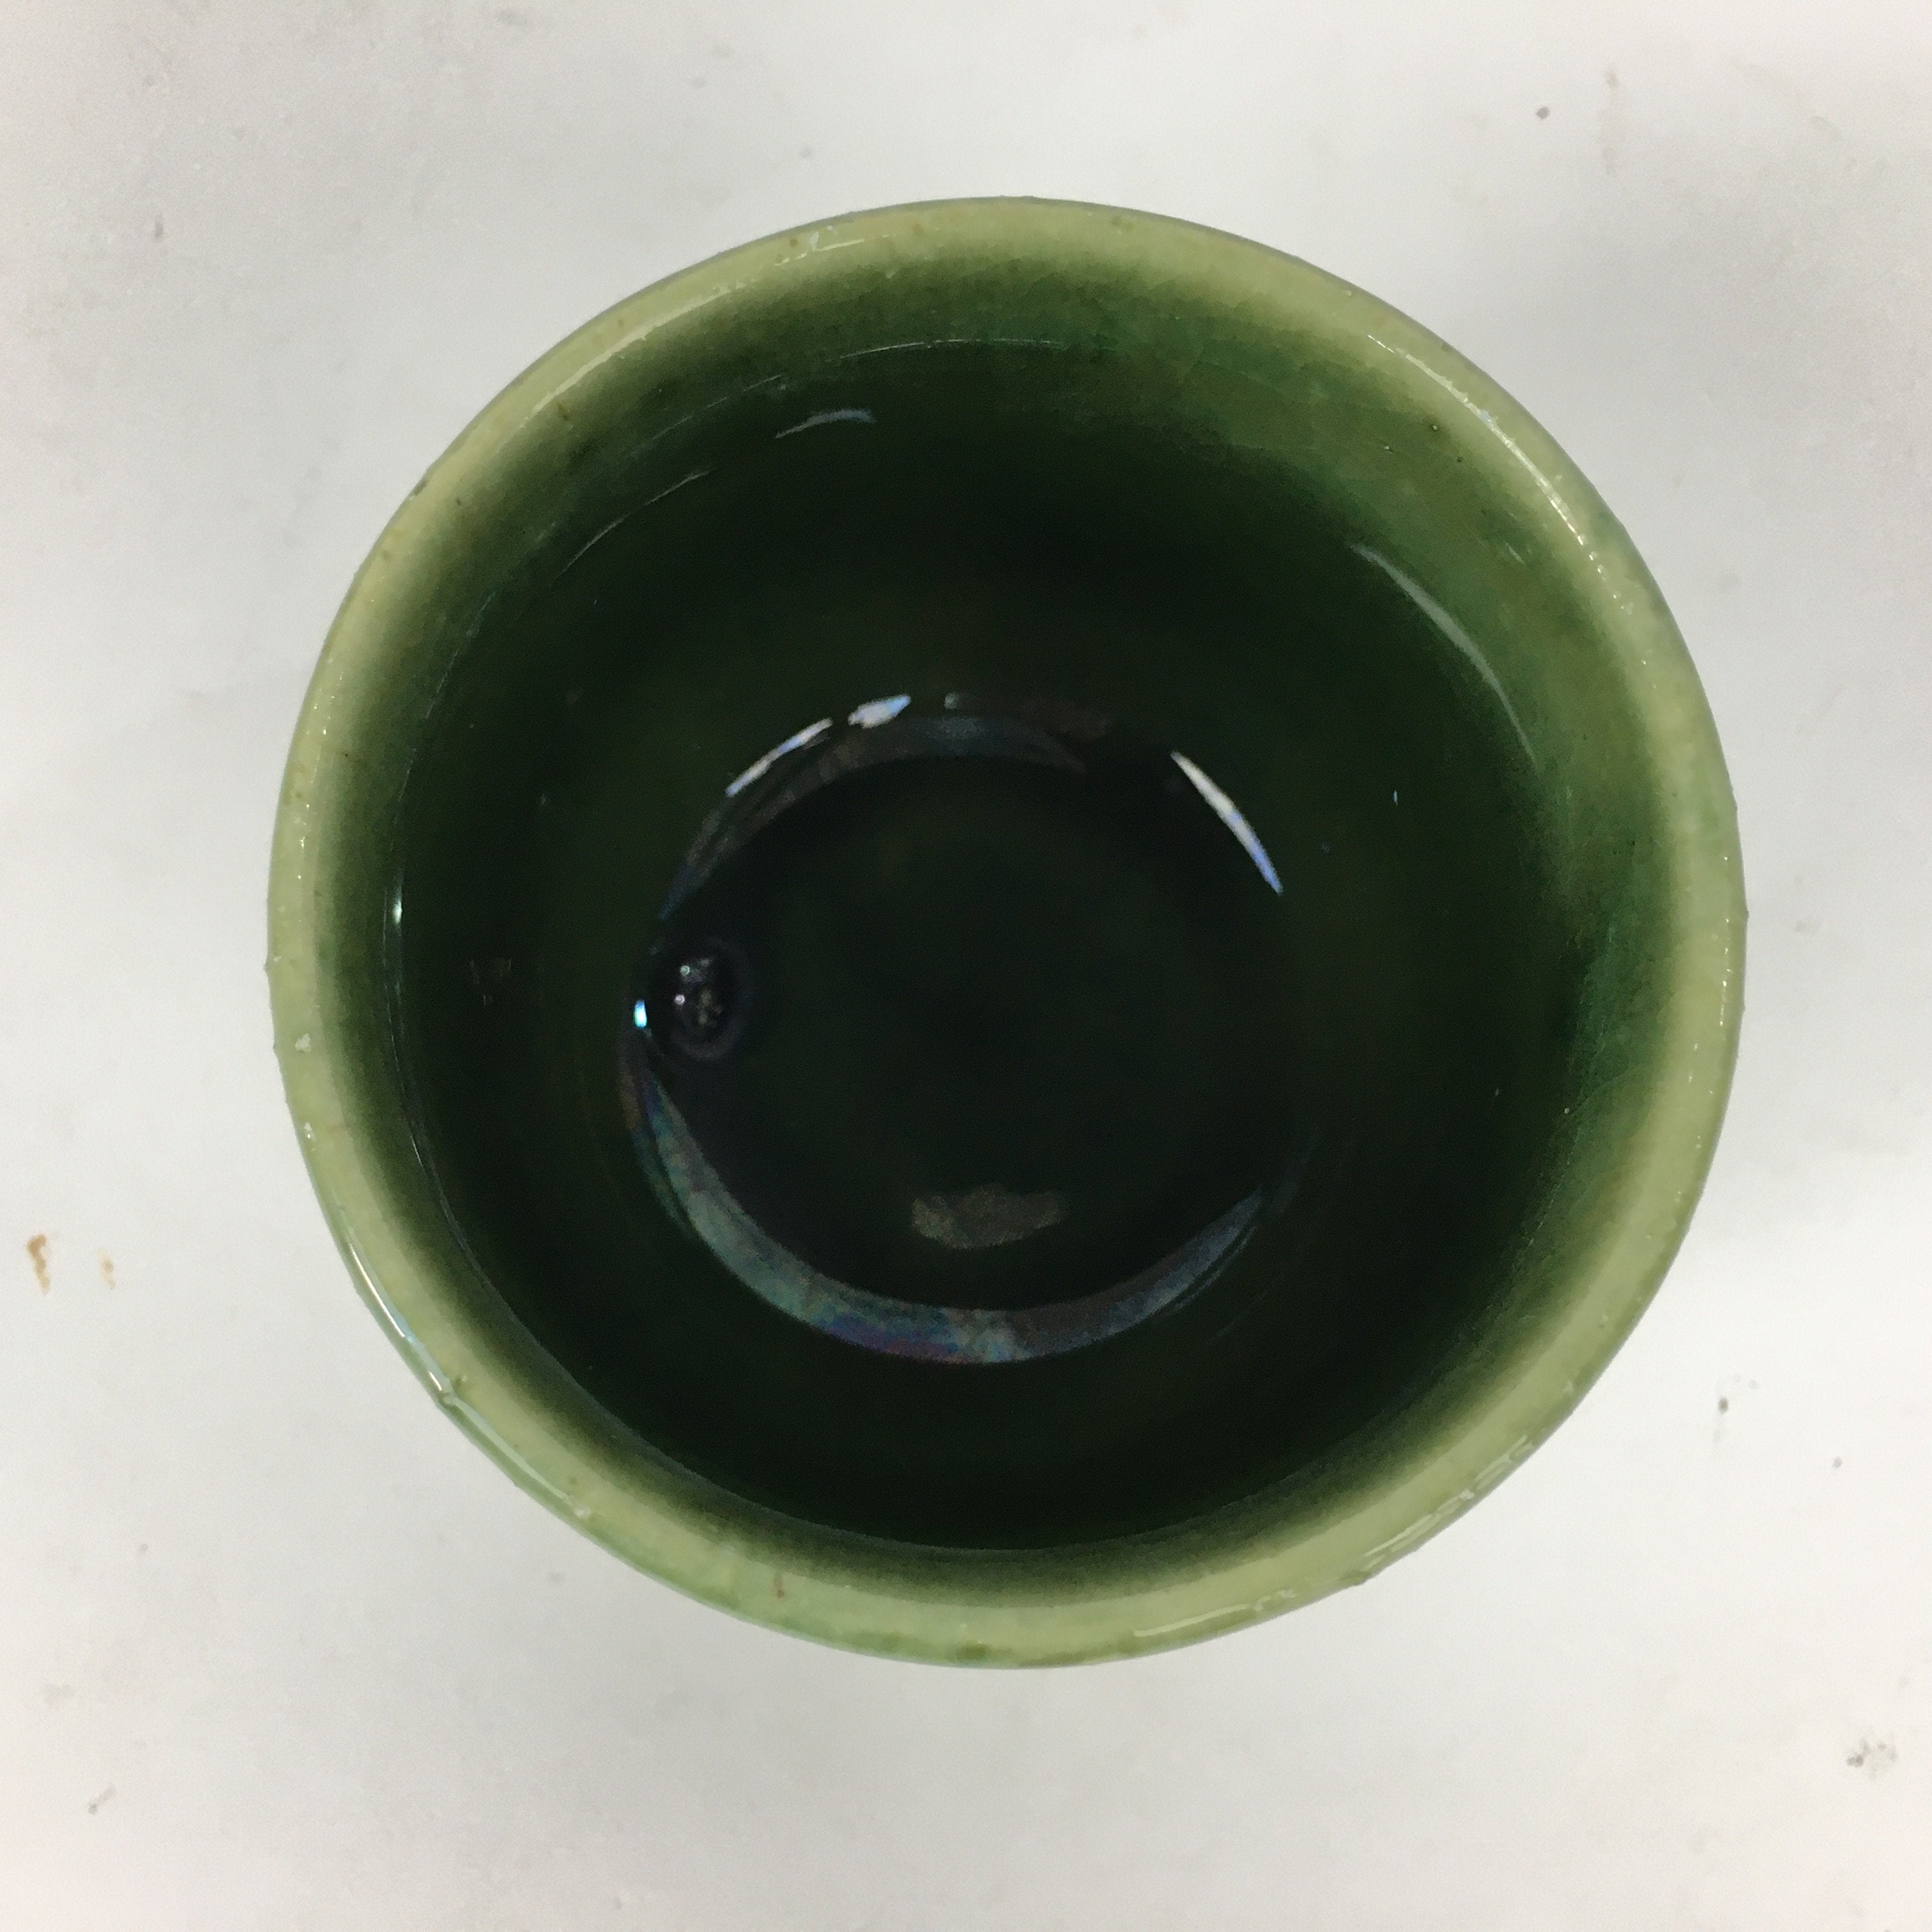 Japanese Ceramic Oribe Ware Teacup Yunomi Vtg Green Yellow Pottery Sencha TC233